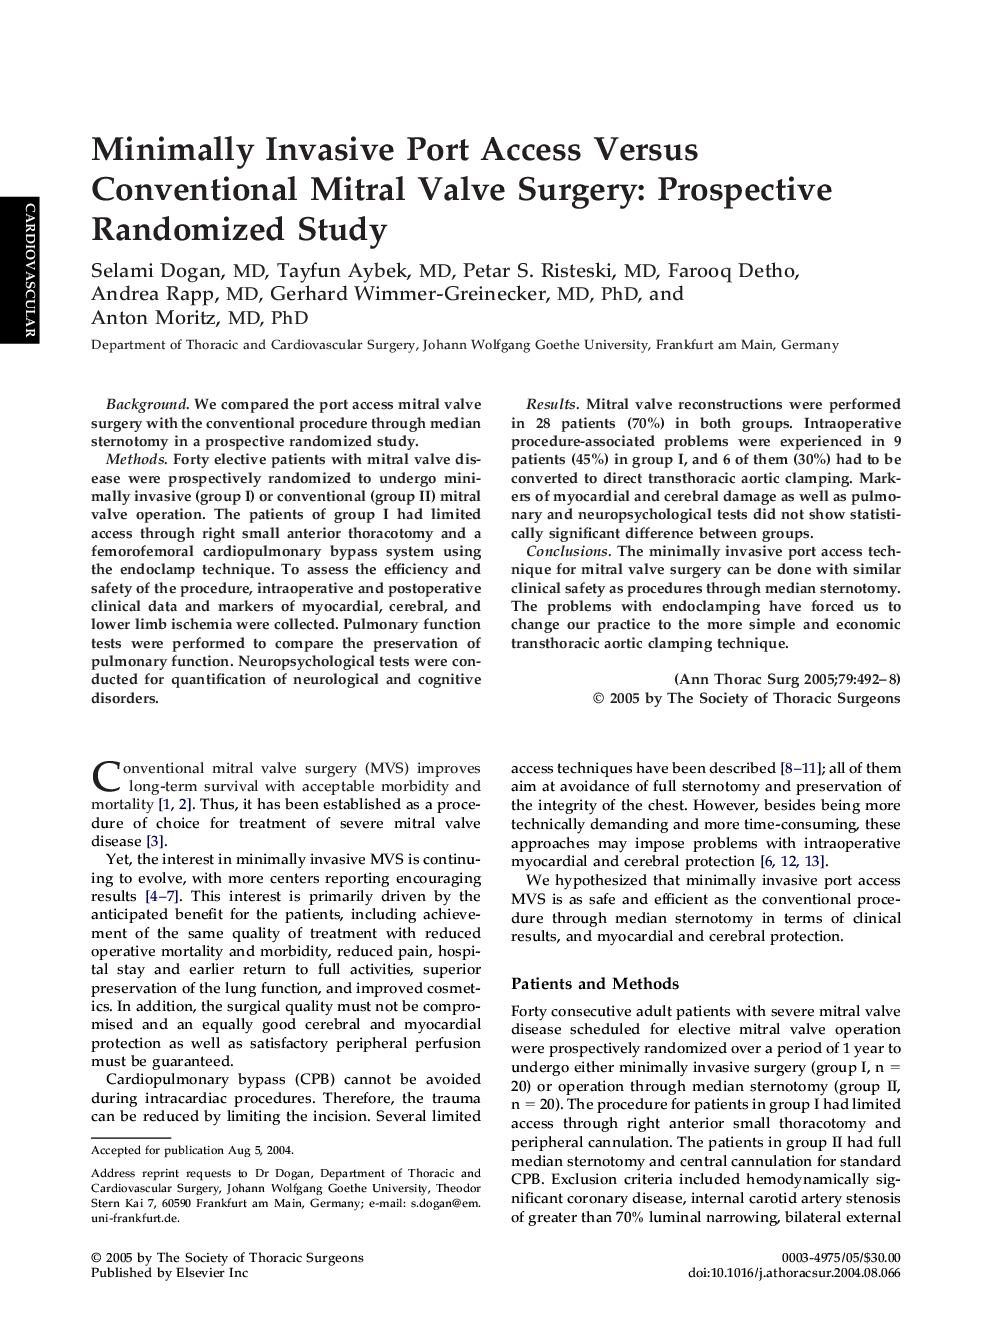 Minimally Invasive Port Access Versus Conventional Mitral Valve Surgery: Prospective Randomized Study